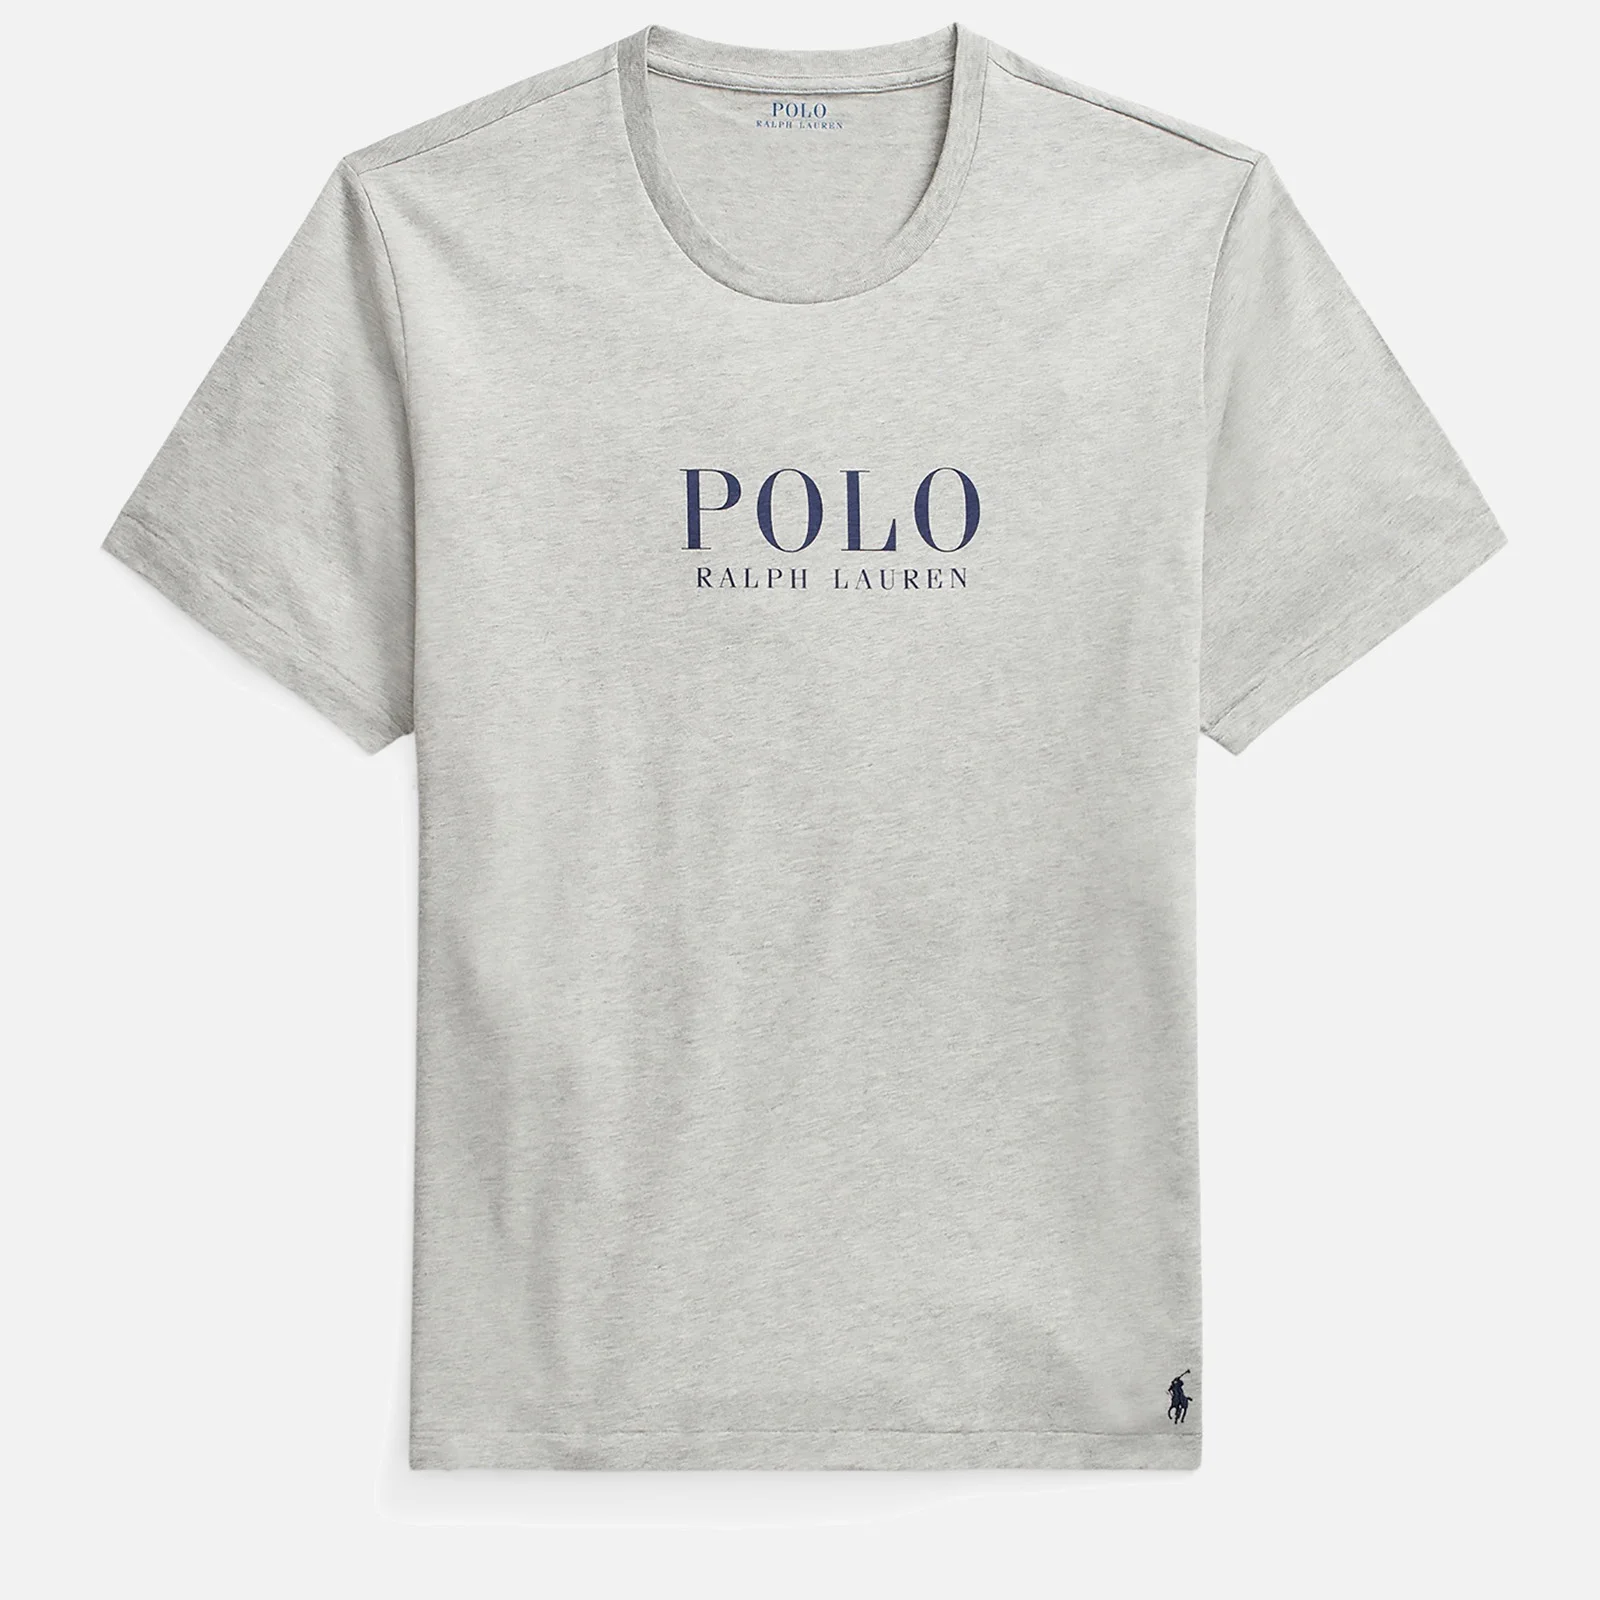 Polo Ralph Lauren Men's Boxed Logo T-Shirt - Andover Heather Image 1